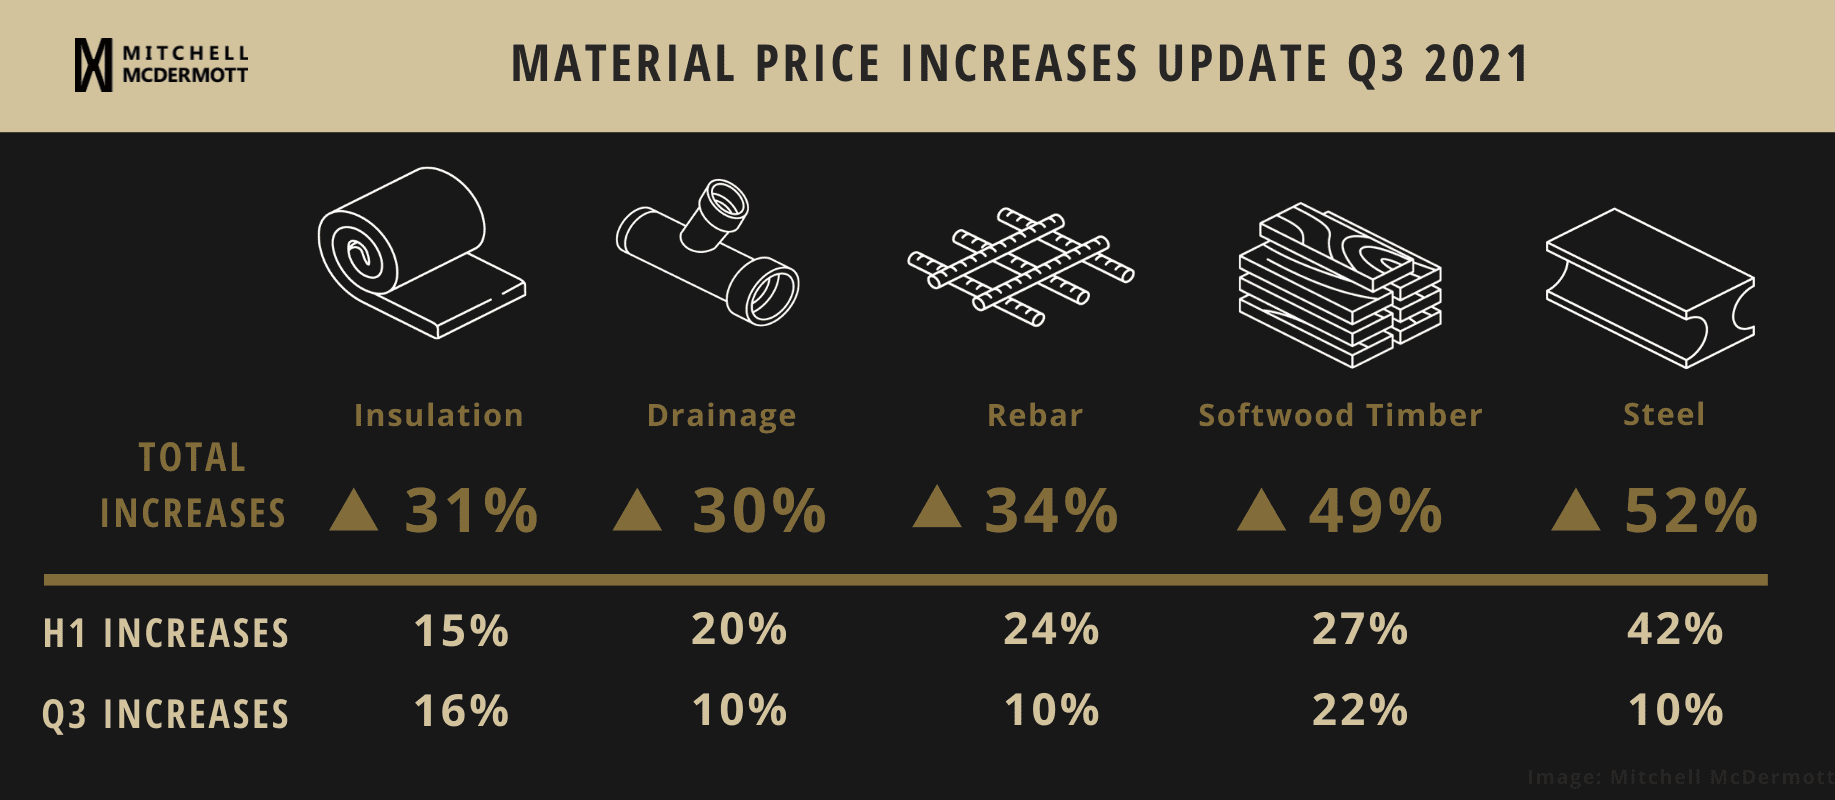 Material price increases update Q3 2021